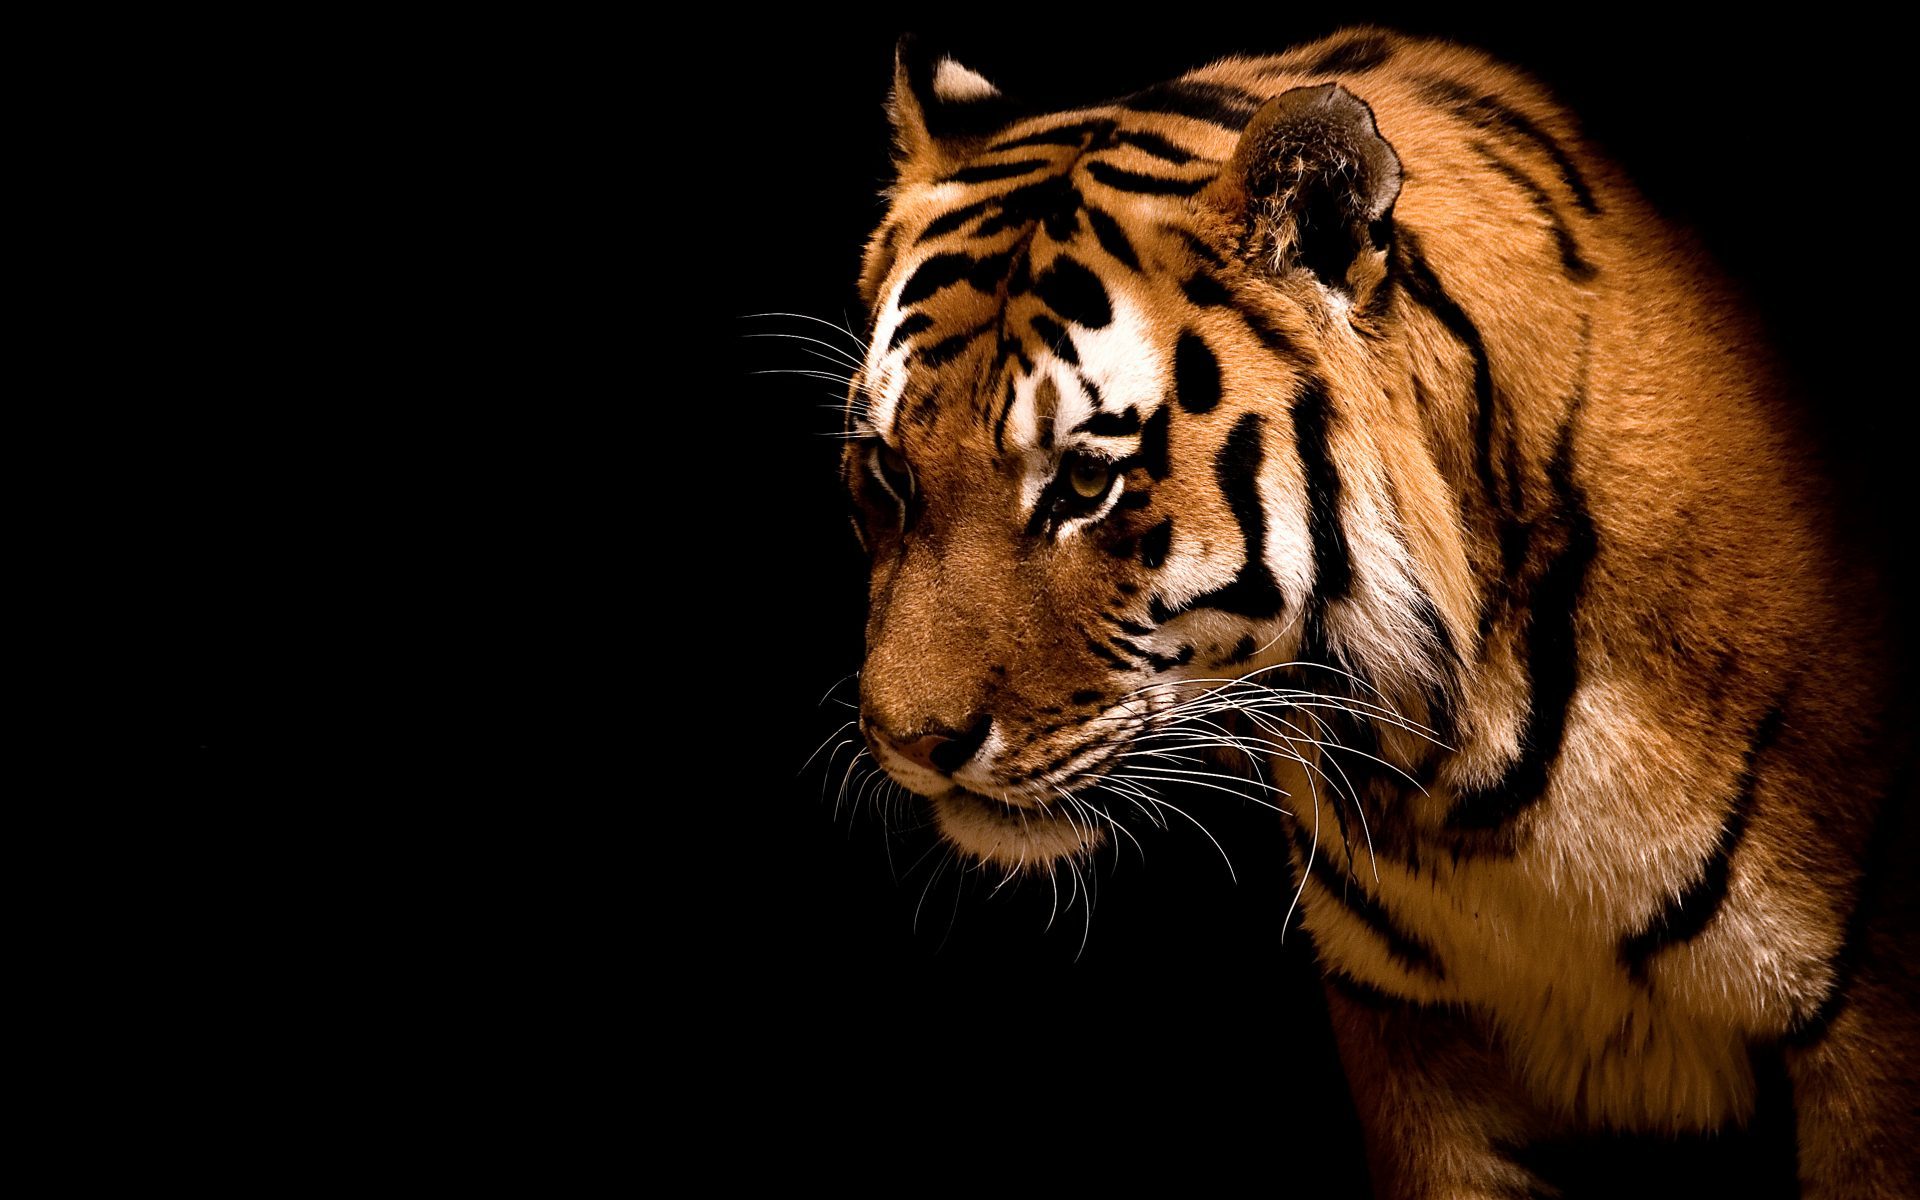 tigers, animals, black